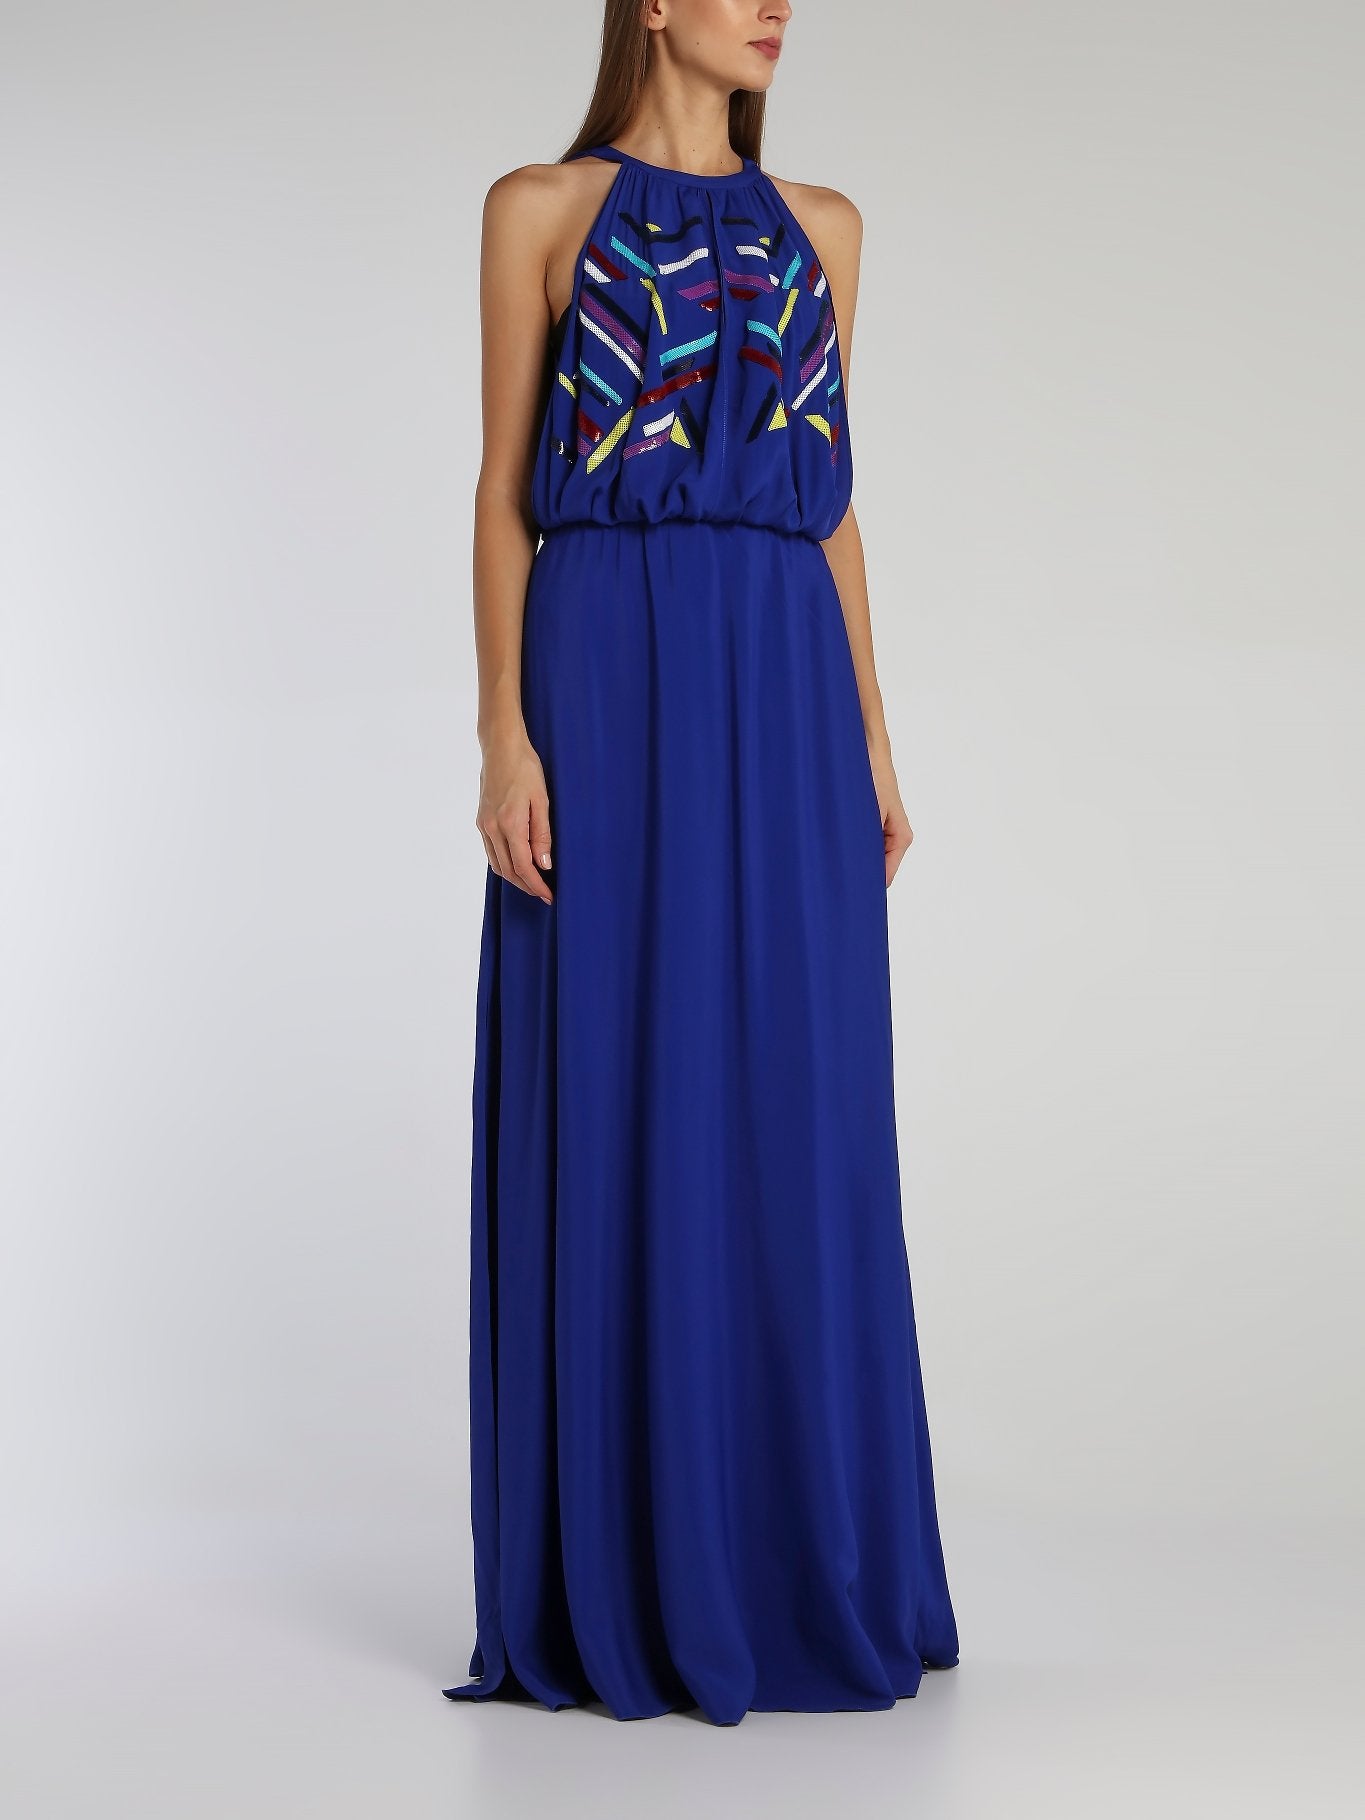 Blue Sequin Detail Halter Dress